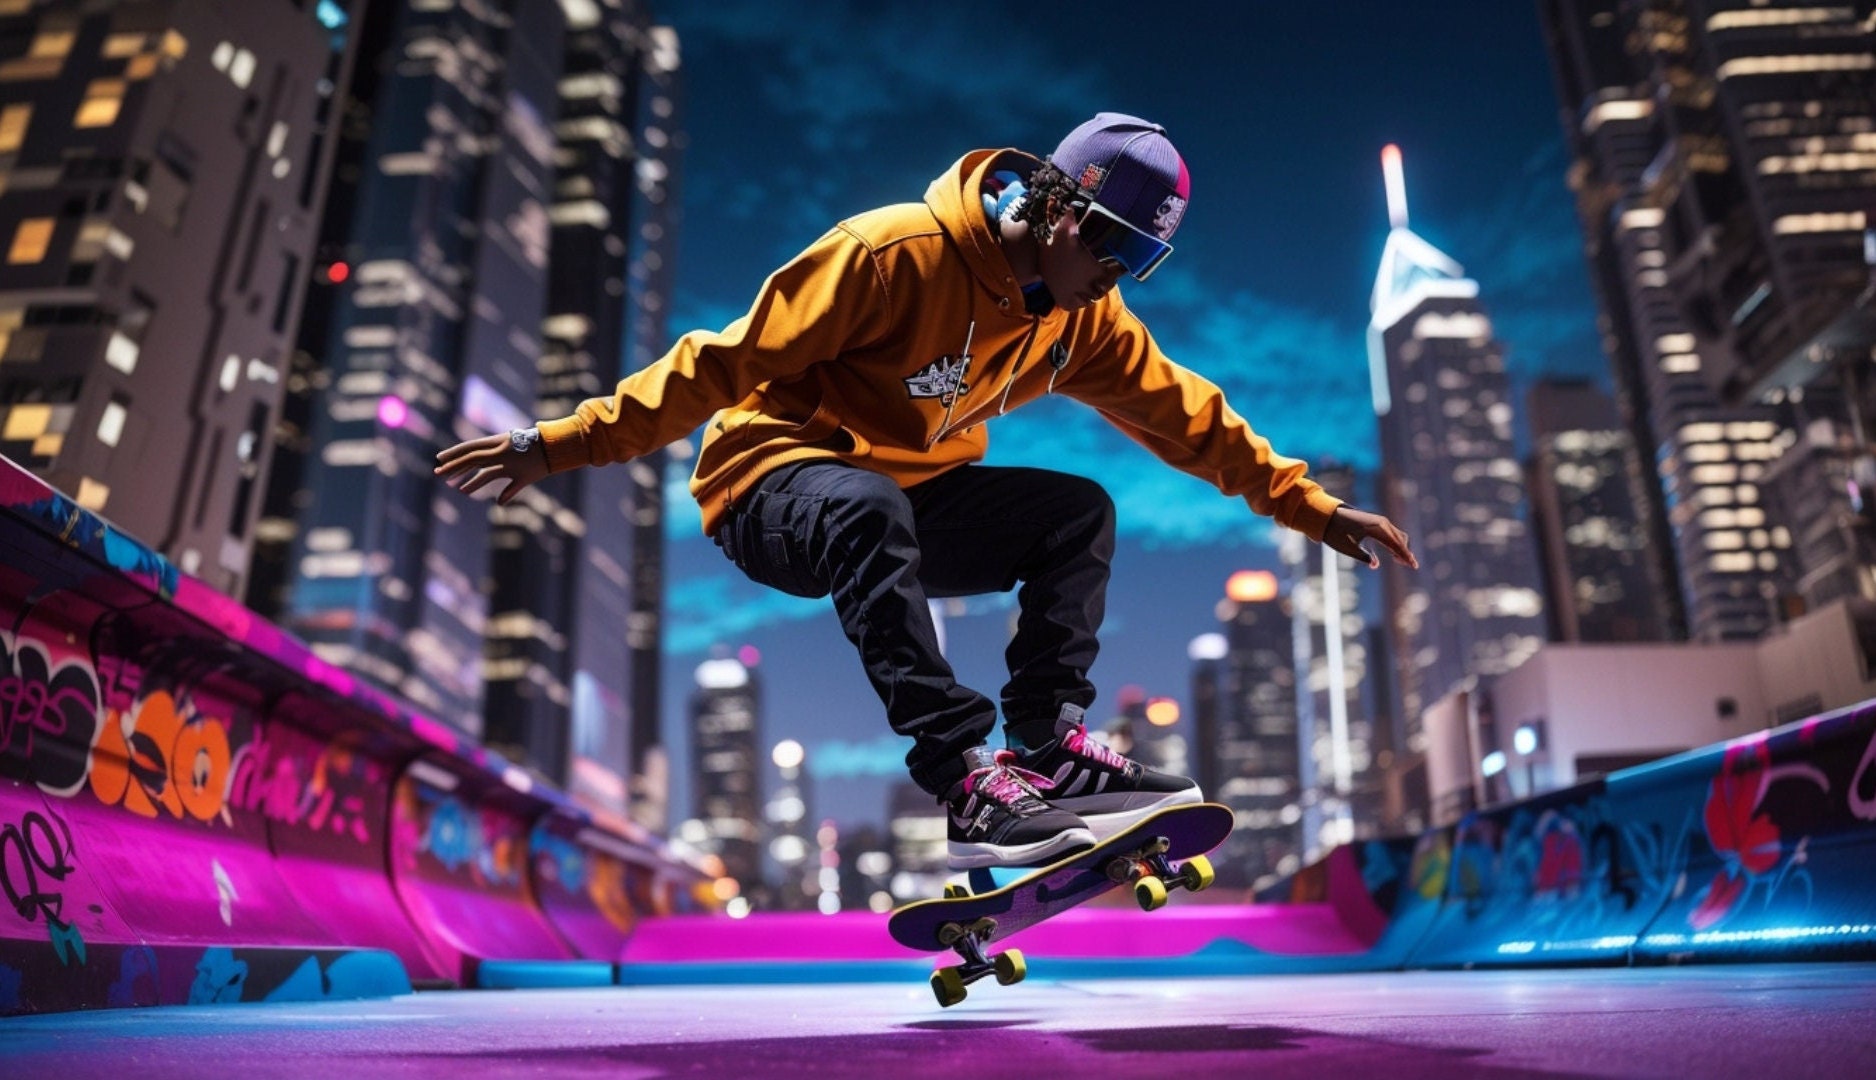 Skateboard Wallpaper 3D 4K  Apps on Google Play